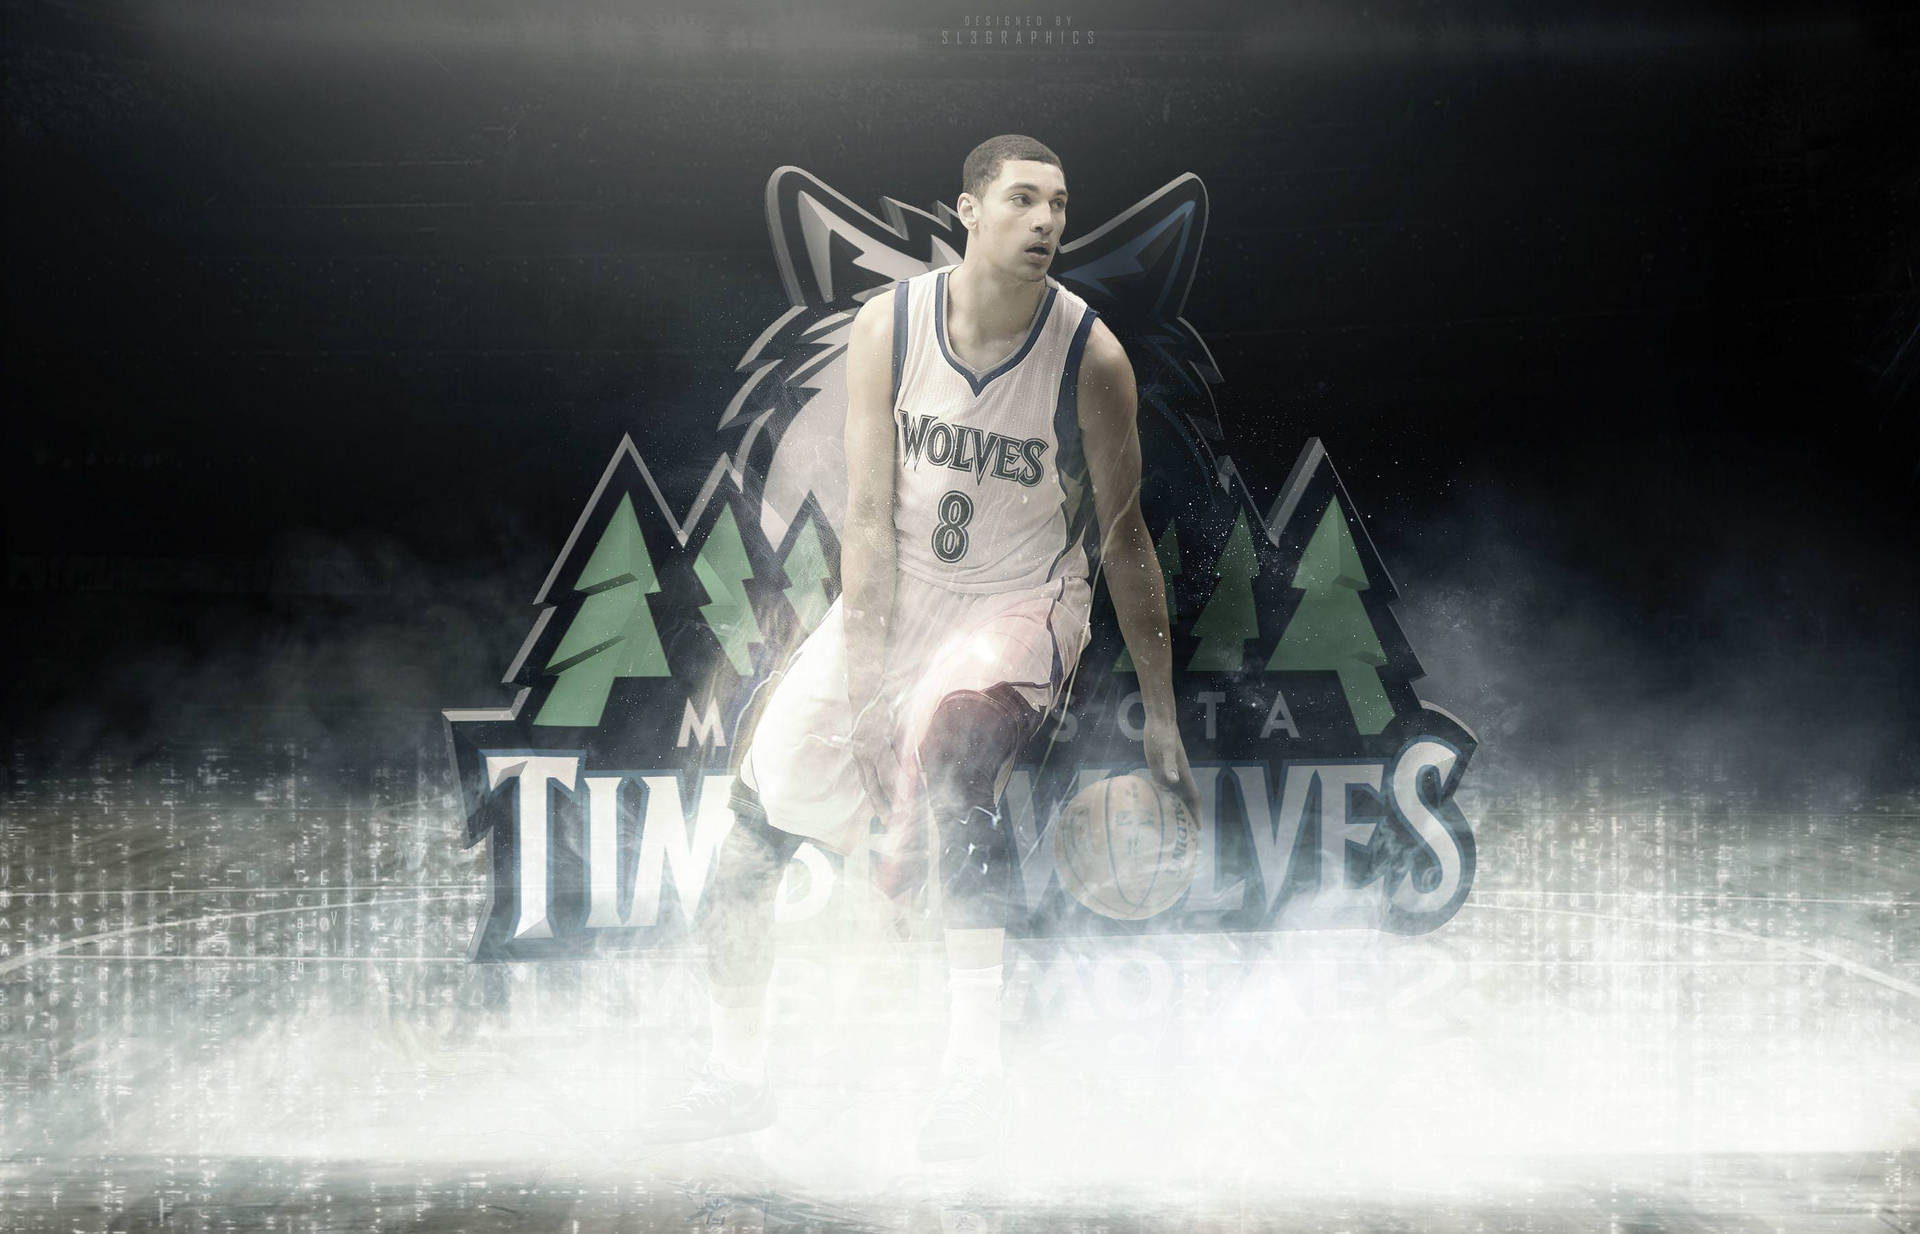 Zach Lavine Wolves Number 8 Jersey Background